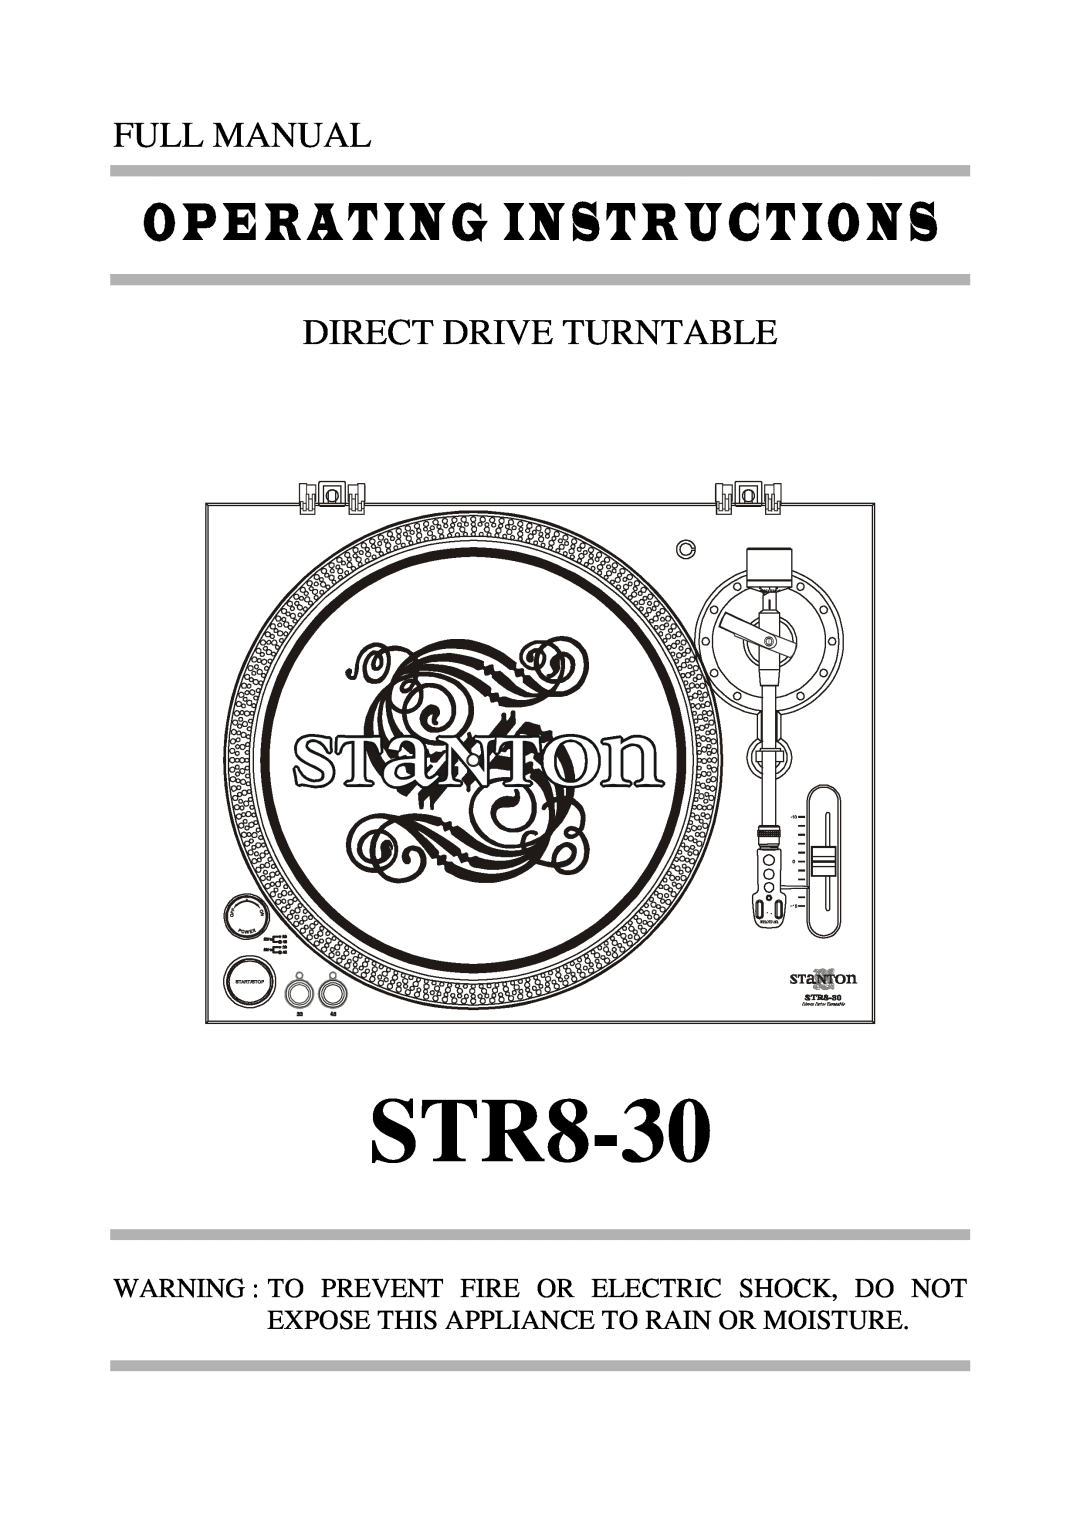 Stanton STR8-30 manual Full Manual Direct Drive Turntable 